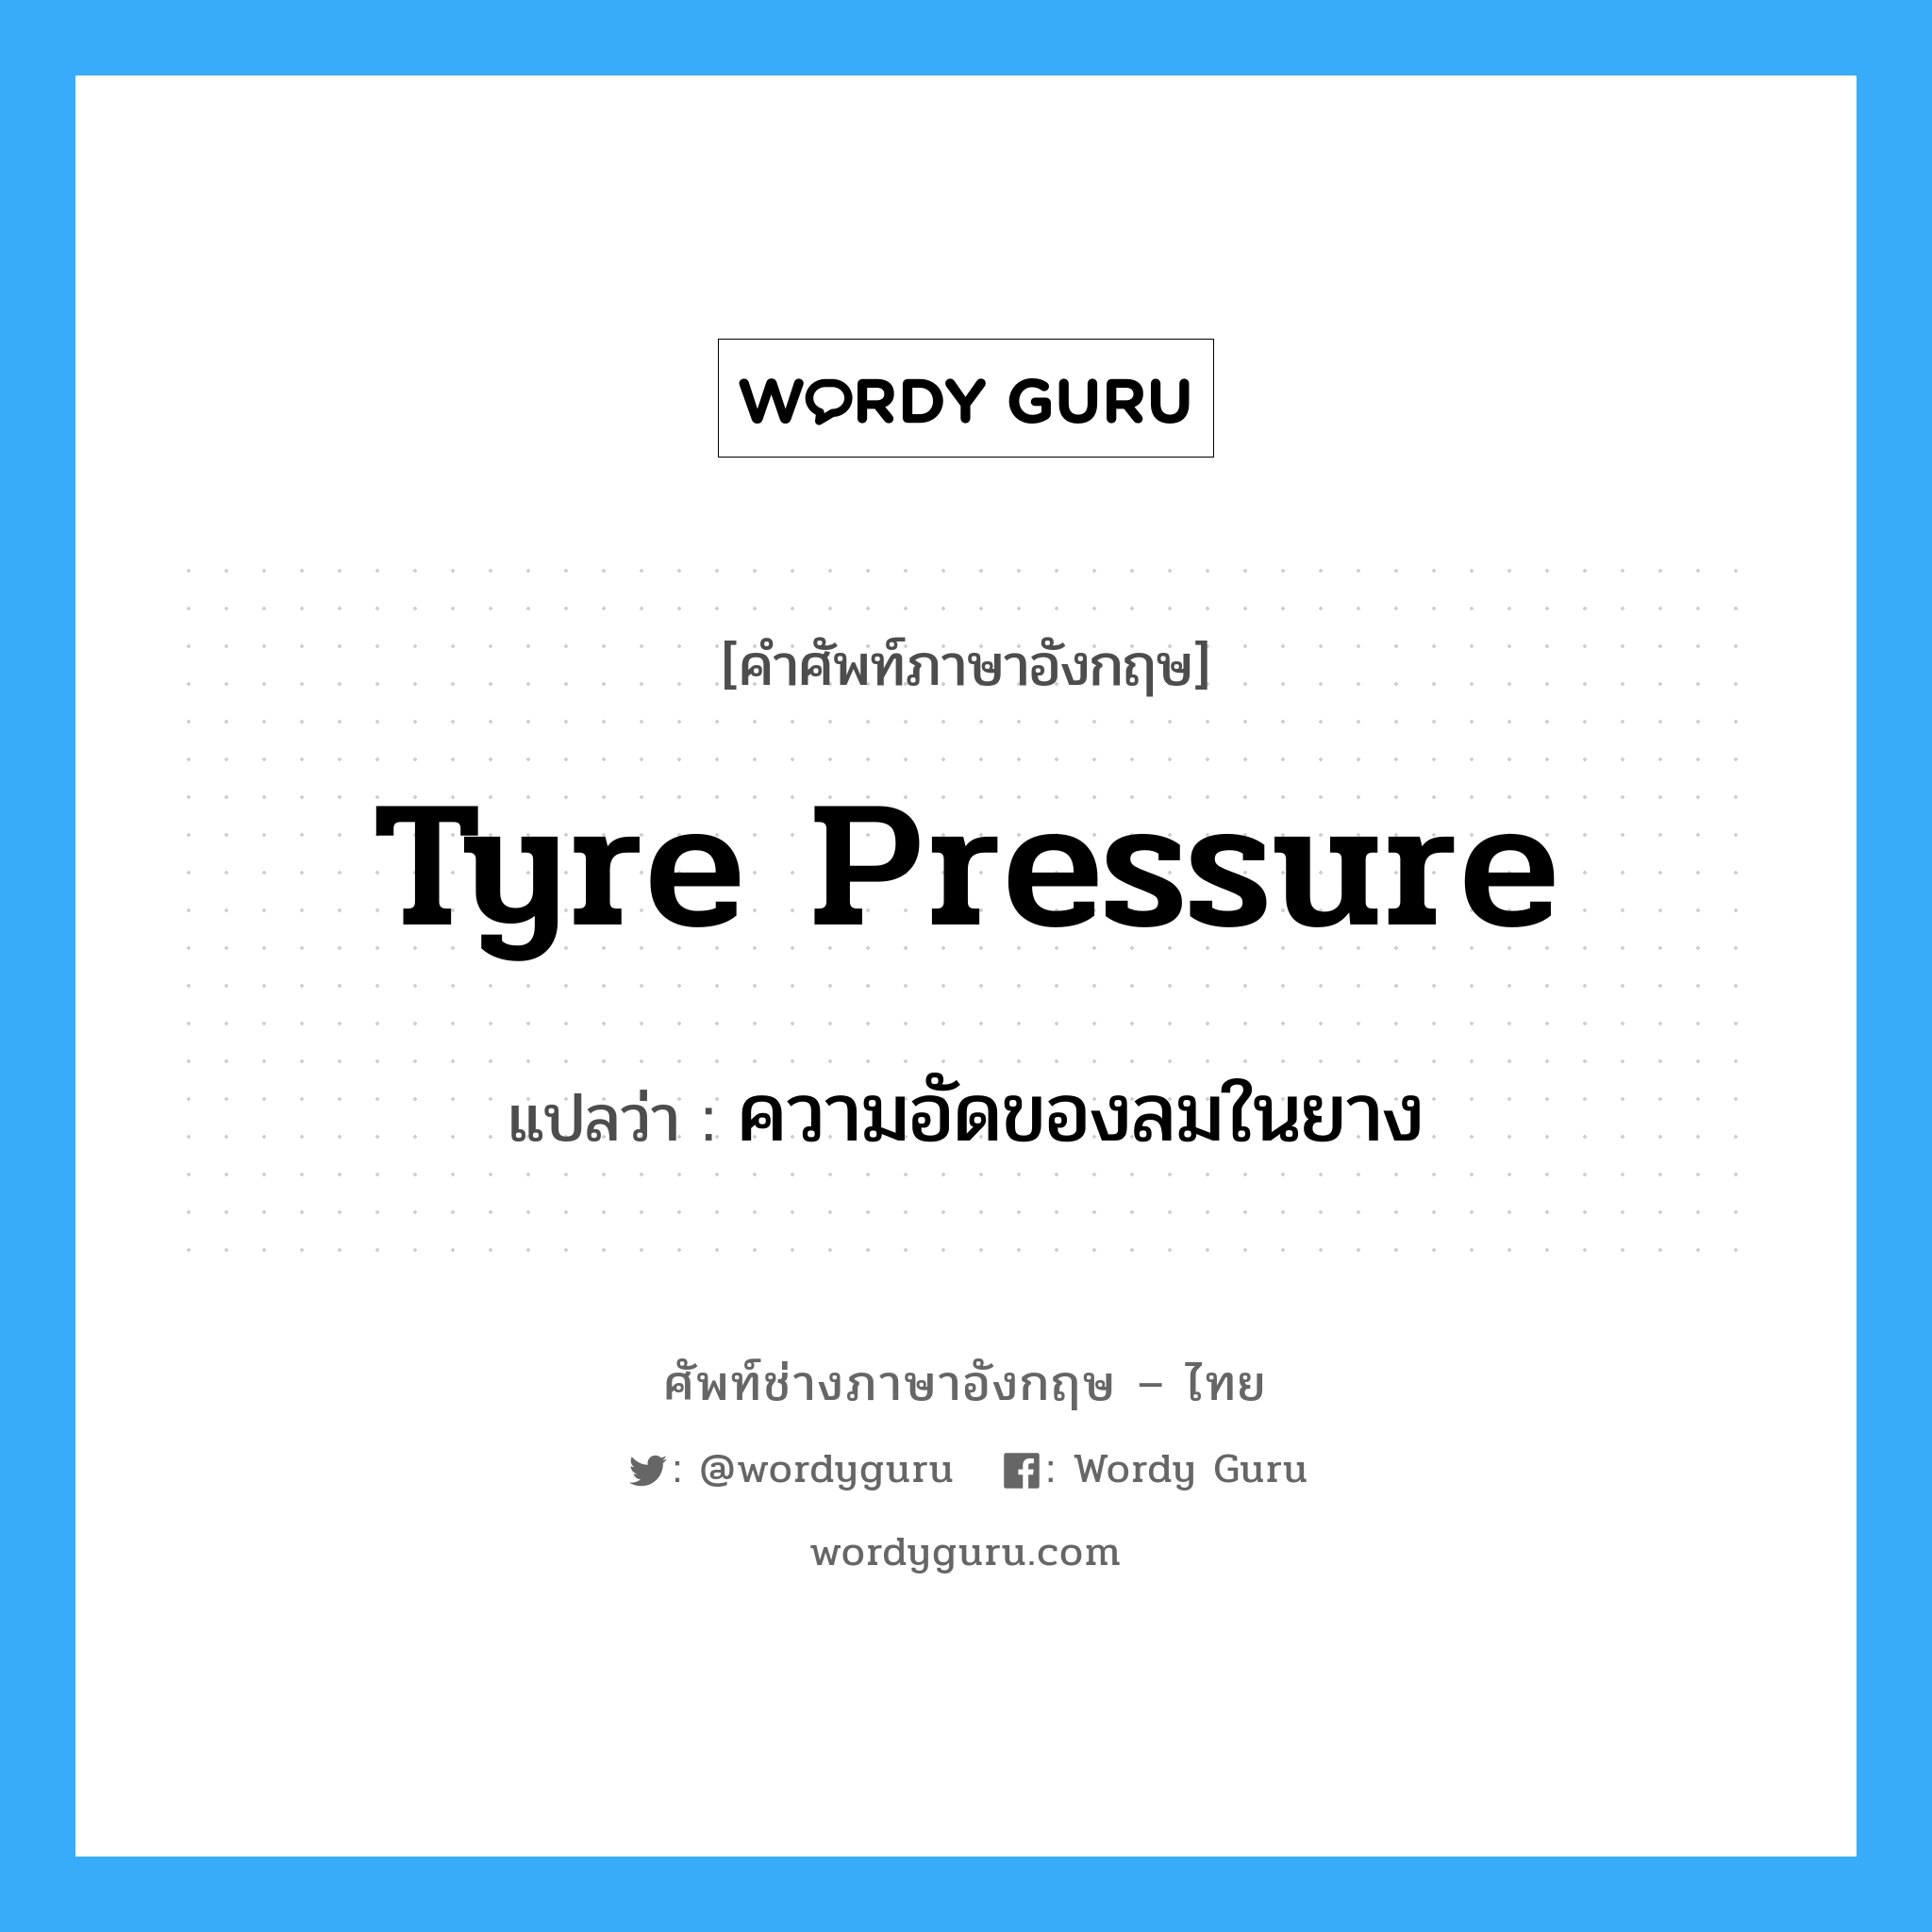 tyre pressure แปลว่า?, คำศัพท์ช่างภาษาอังกฤษ - ไทย tyre pressure คำศัพท์ภาษาอังกฤษ tyre pressure แปลว่า ความอัดของลมในยาง